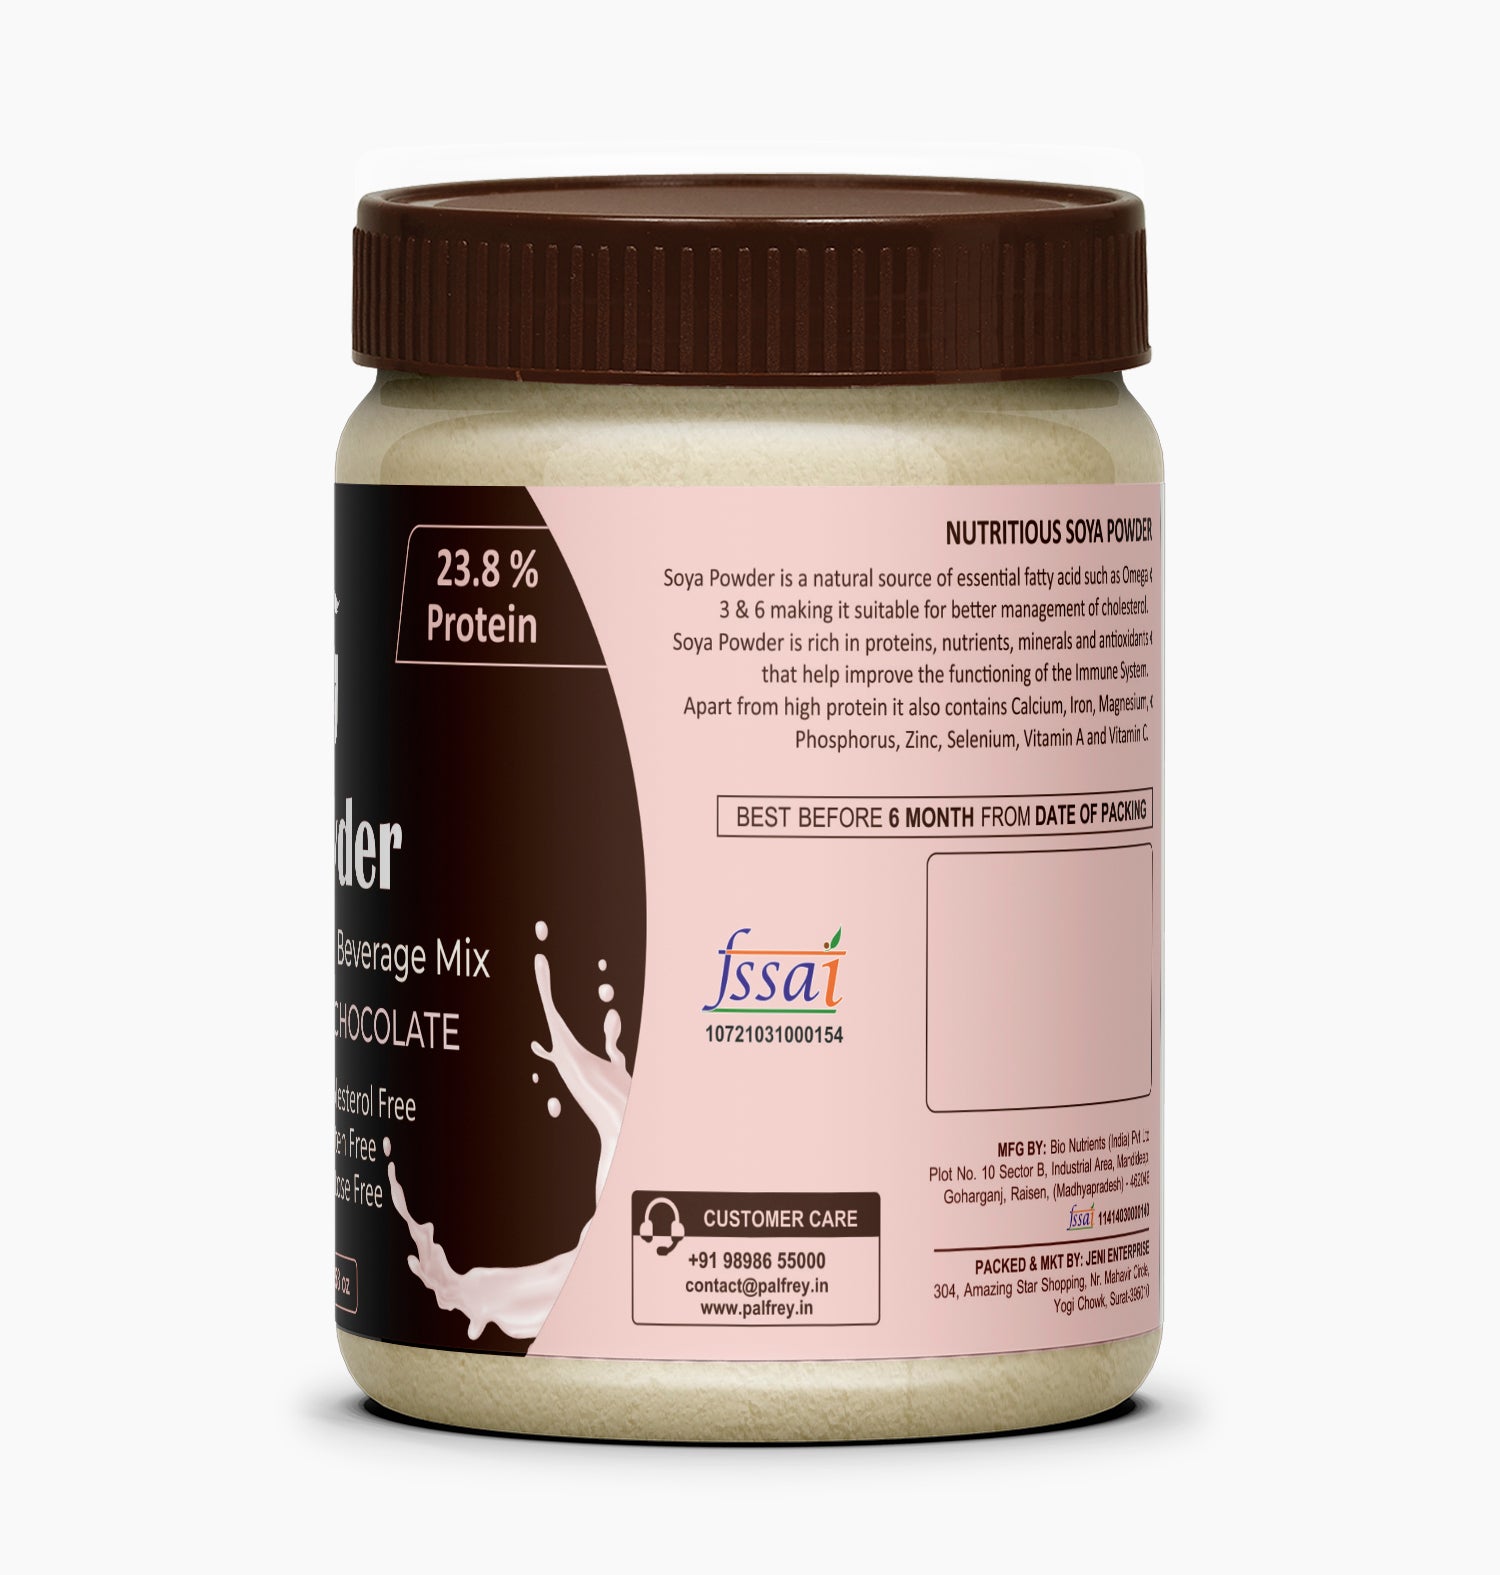 Soya Drink Powder Vegan- Non GMO - Chocolate-300g